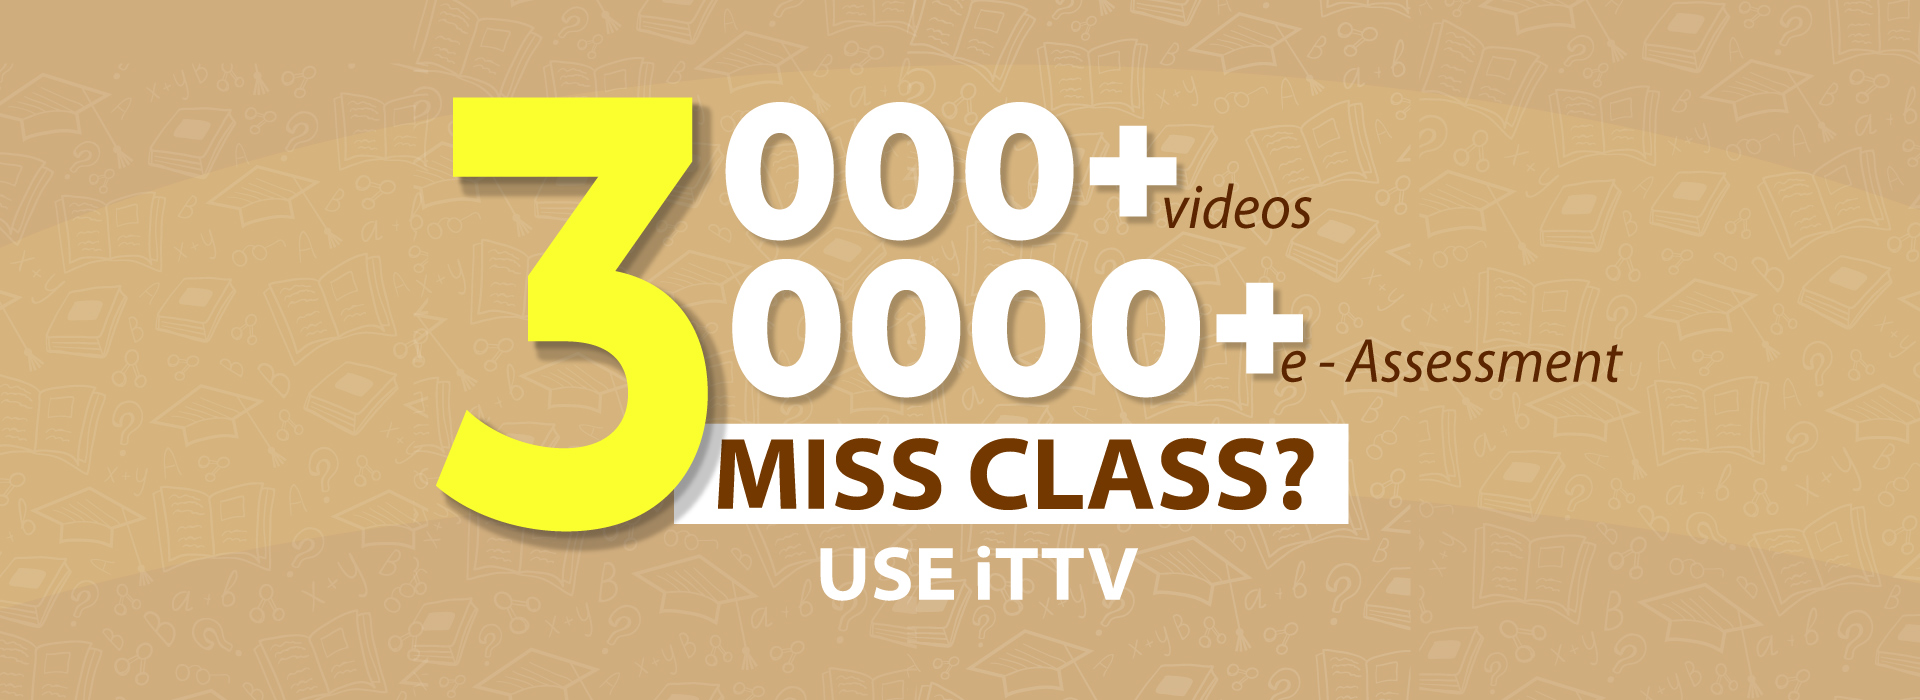 iTTV - Miss Class